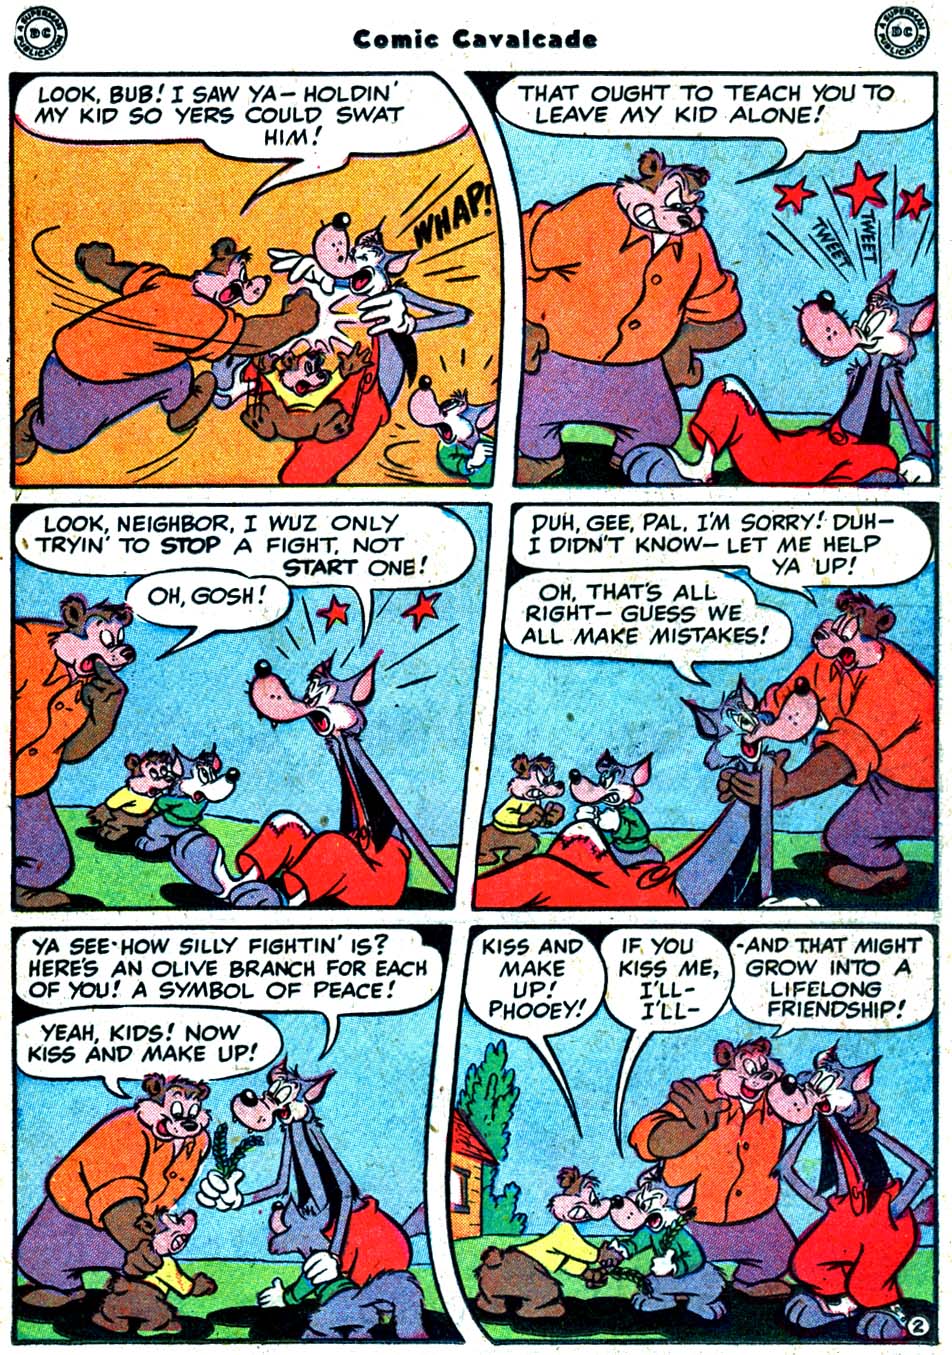 Comic Cavalcade issue 32 - Page 57